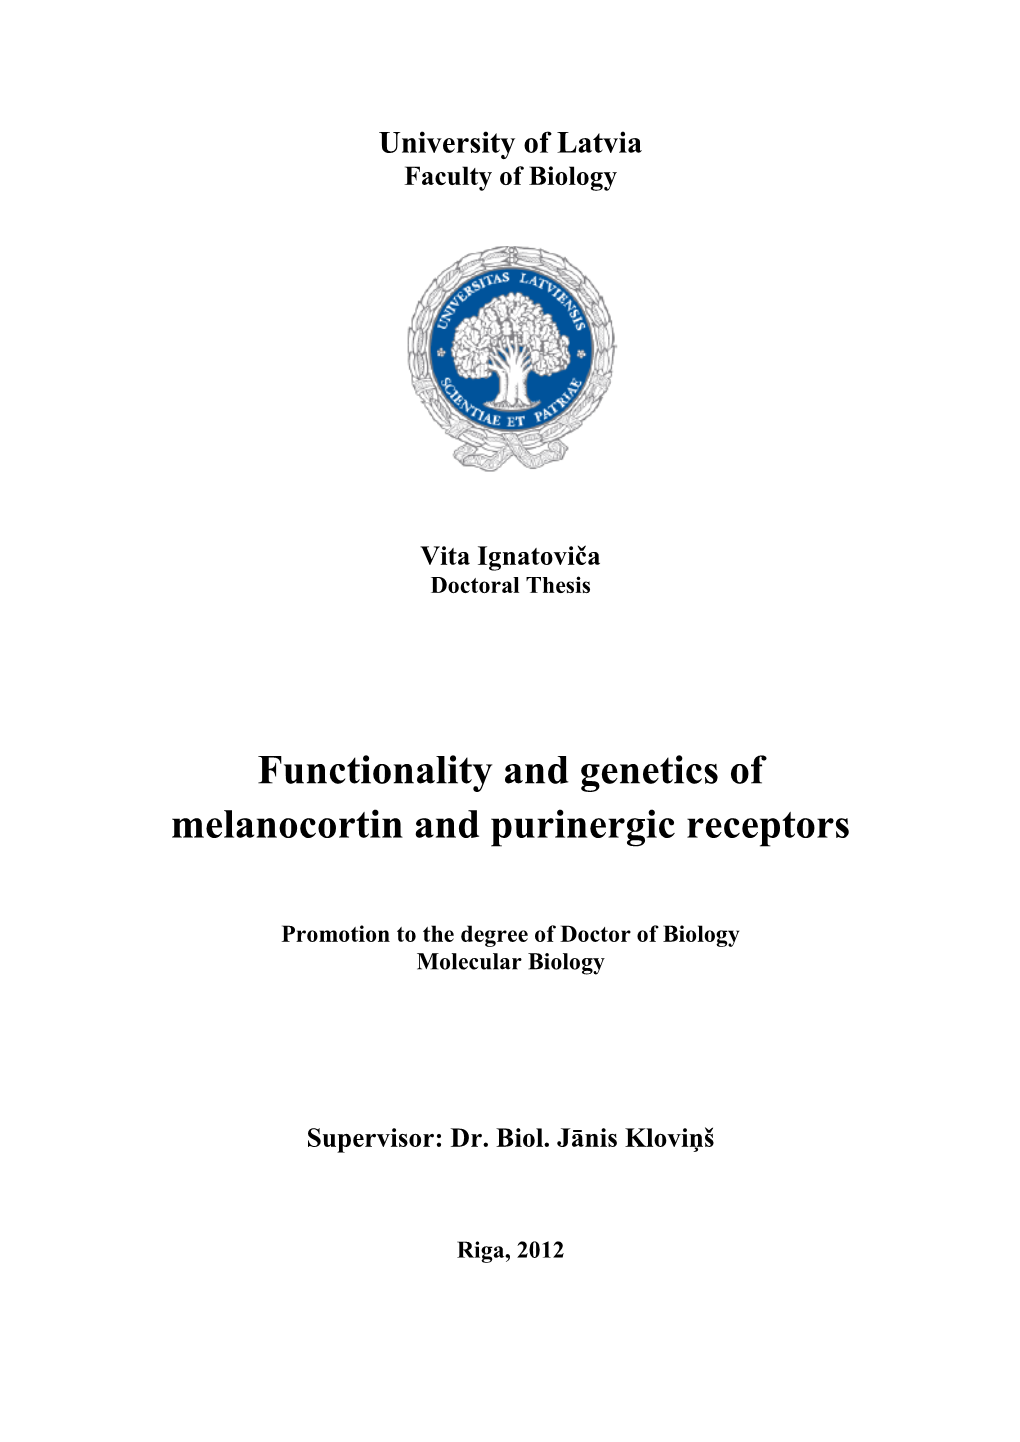 Functionality and Genetics of Melanocortin and Purinergic Receptors